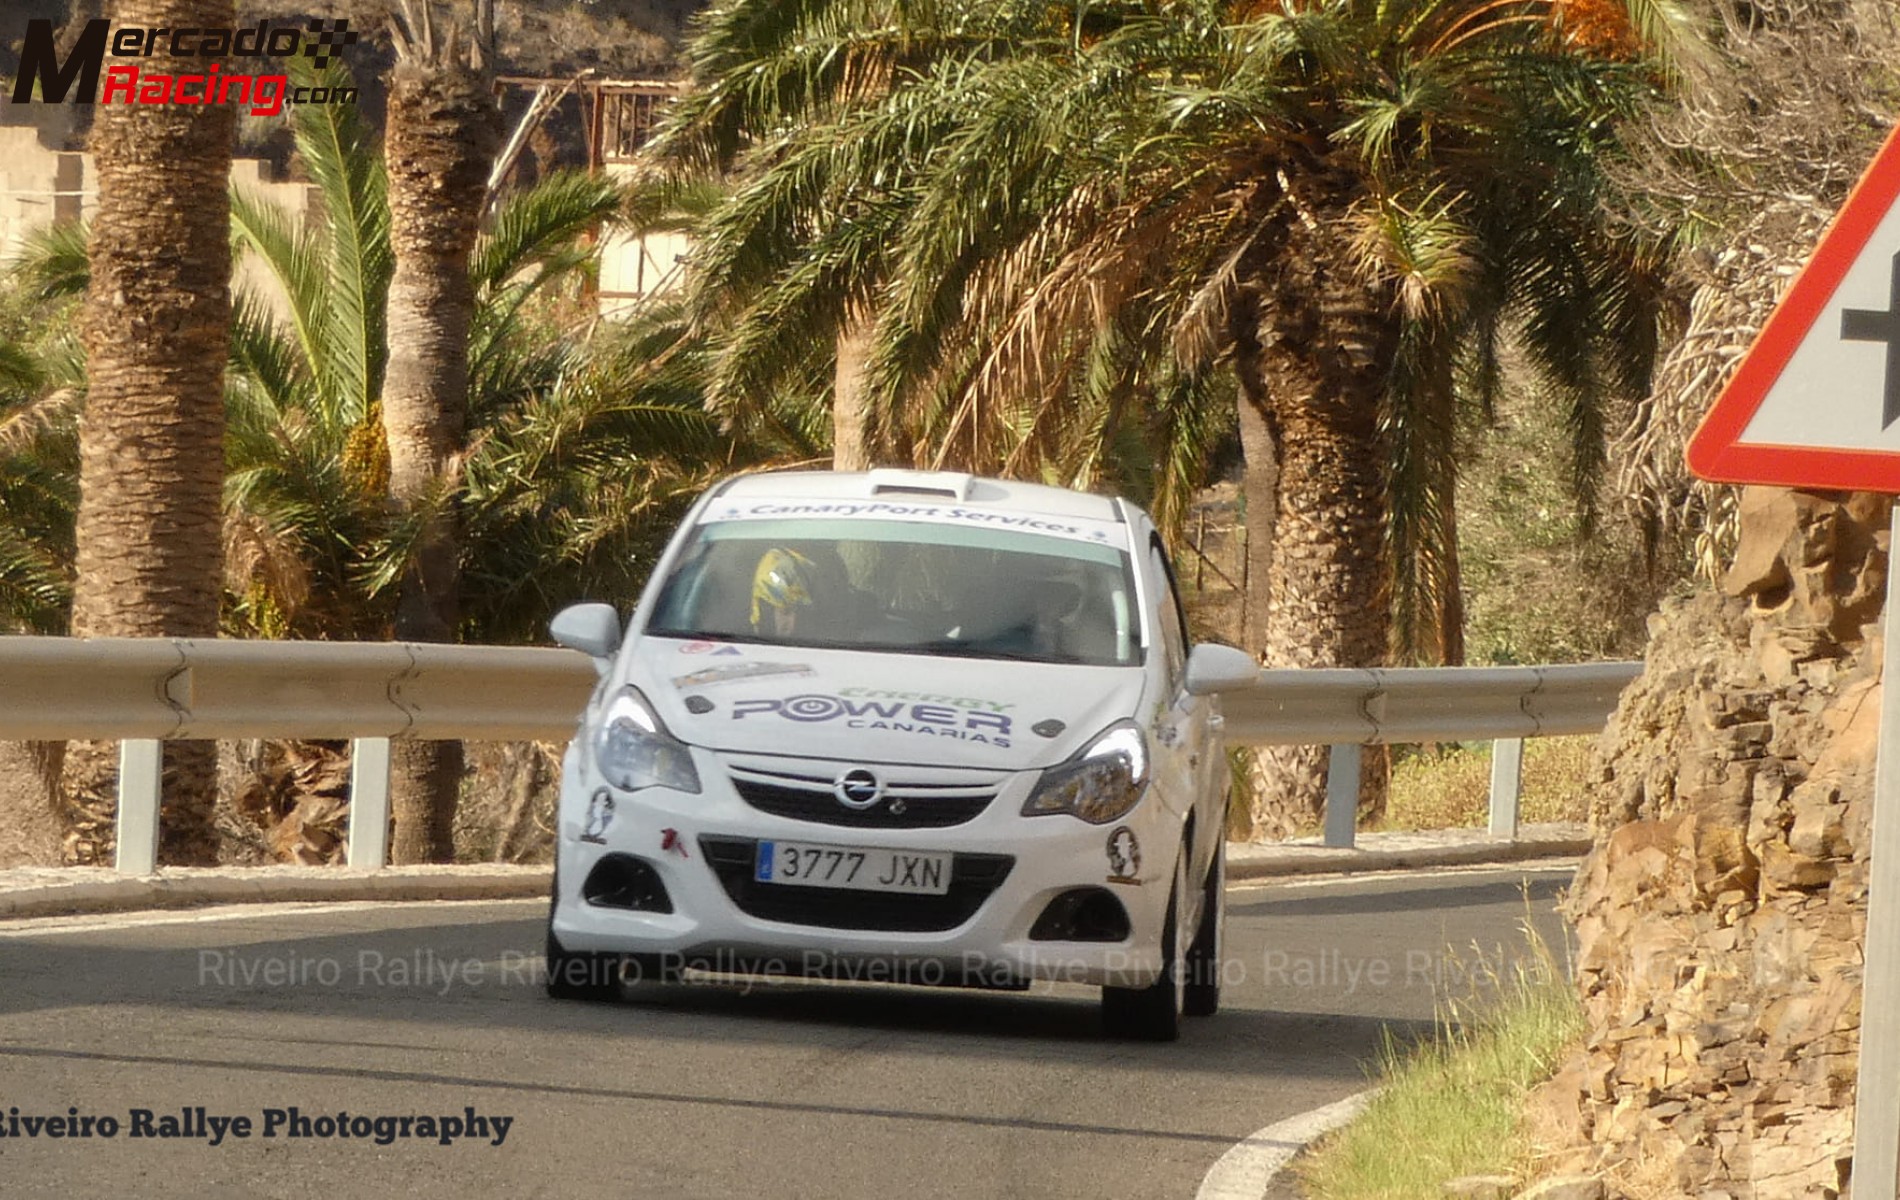 Opel corsa opc nurbungring n3